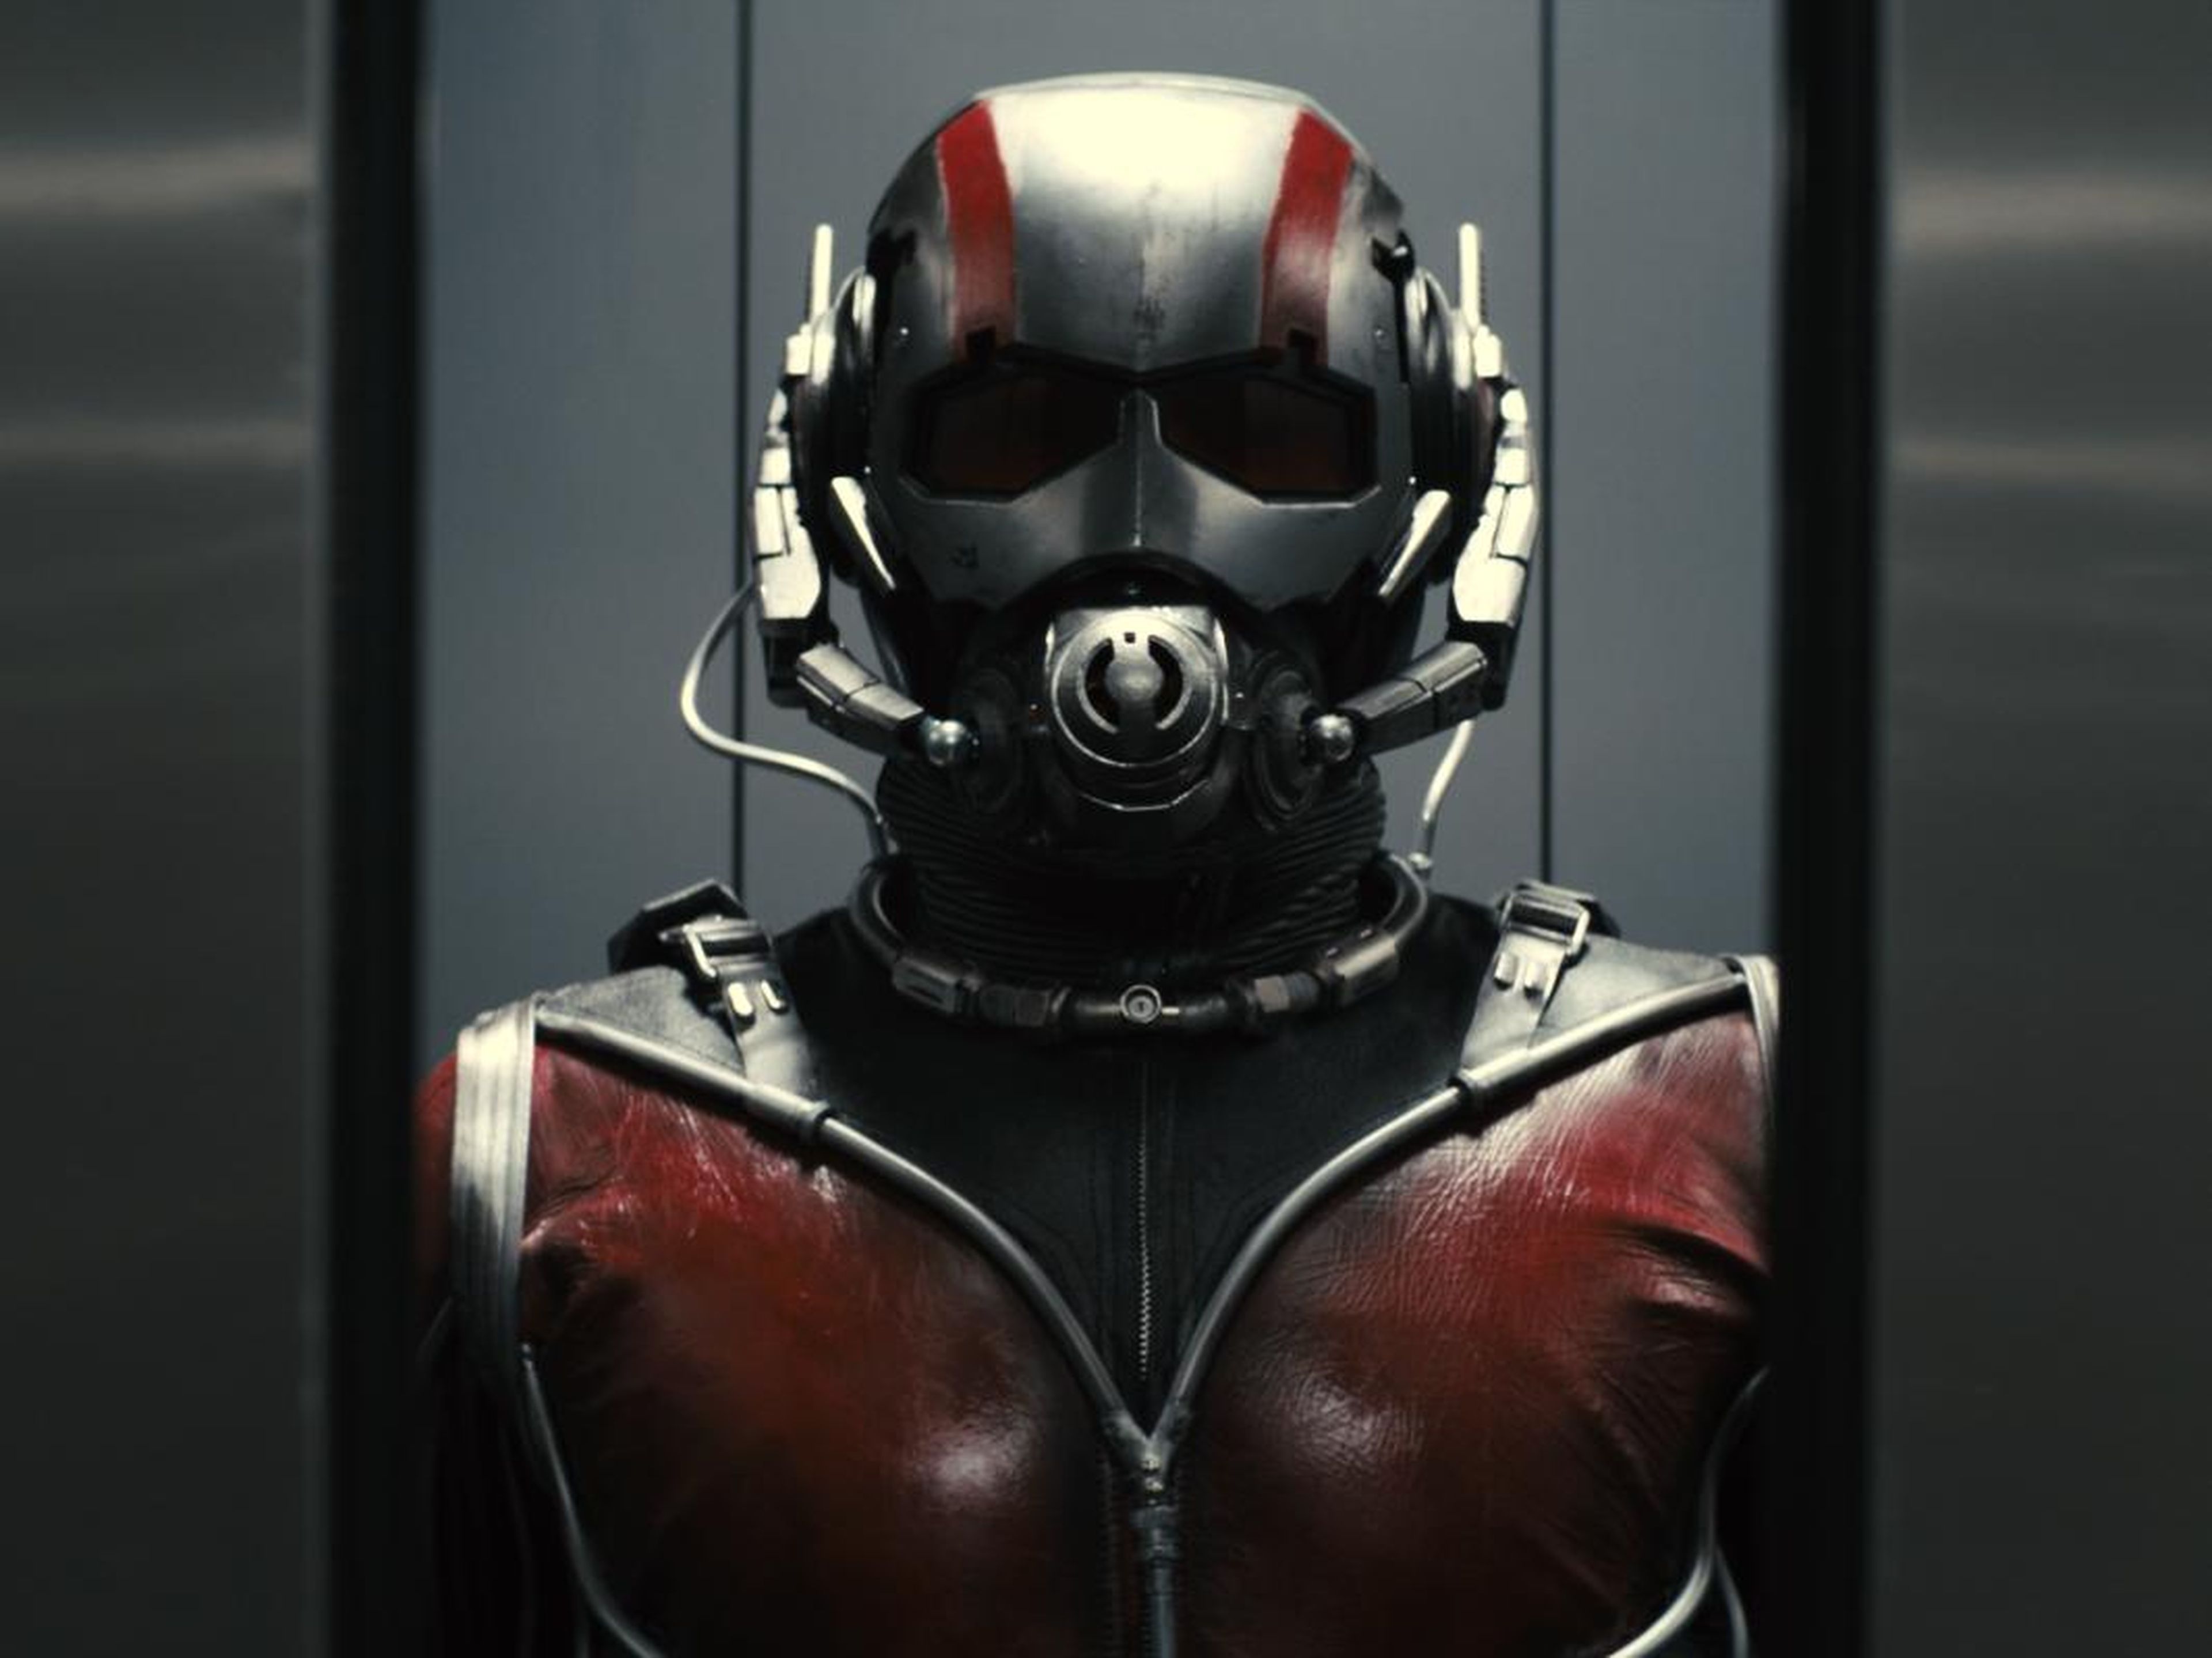 19. "Ant-Man" (2015)